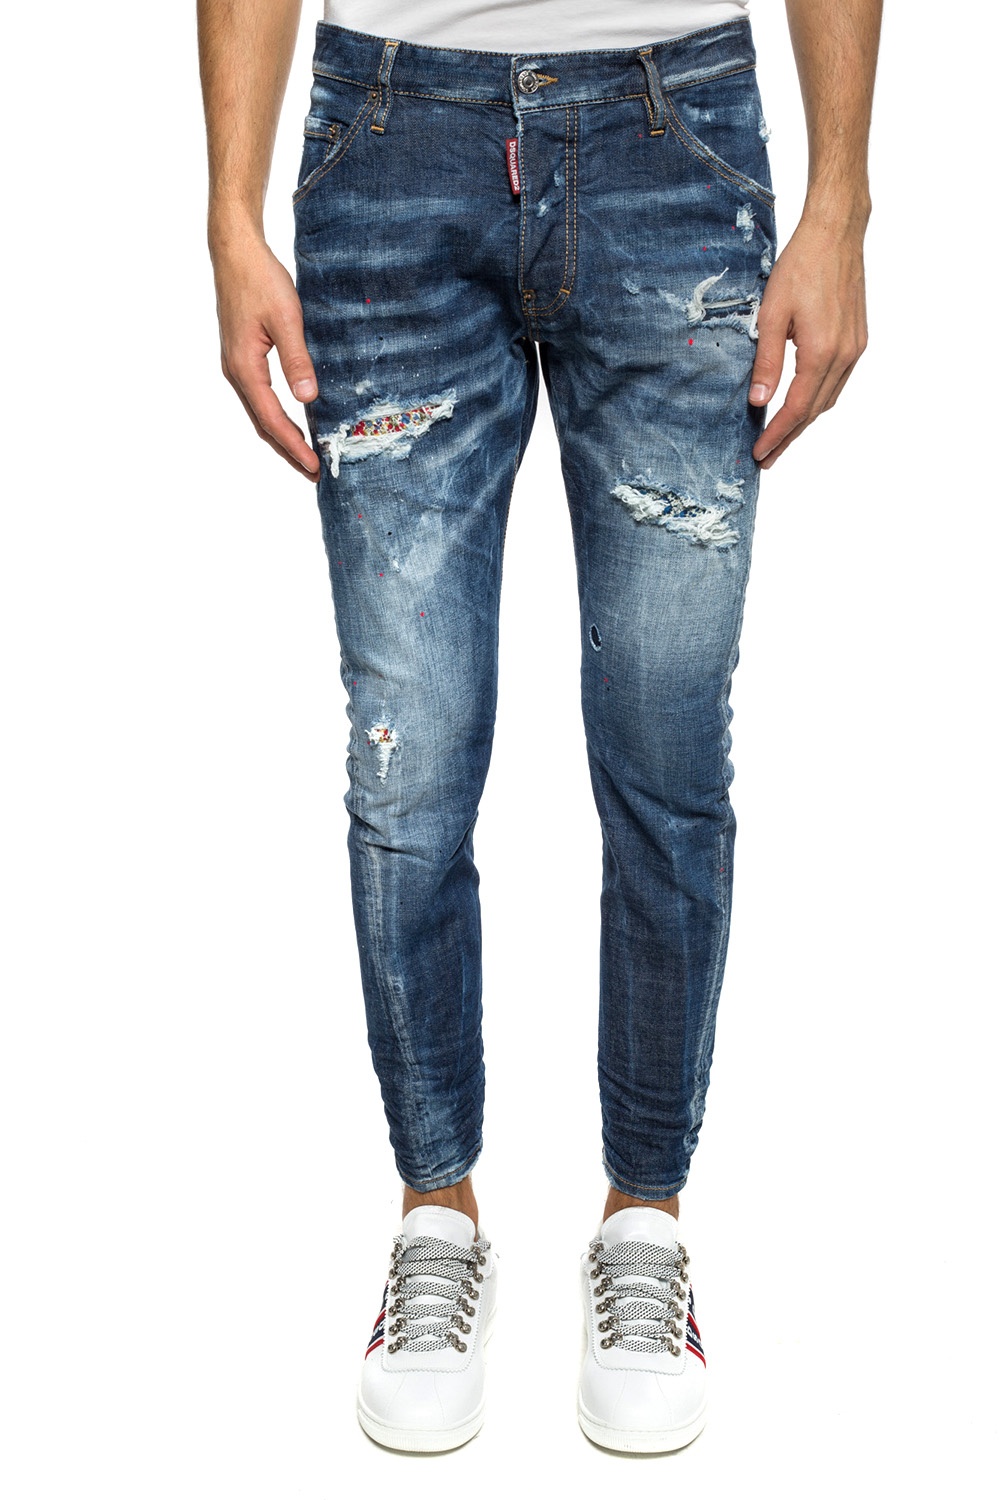 Dsquared2 'Classic Kenny Twist Jean' jeans   Men's Clothing   Vitkac